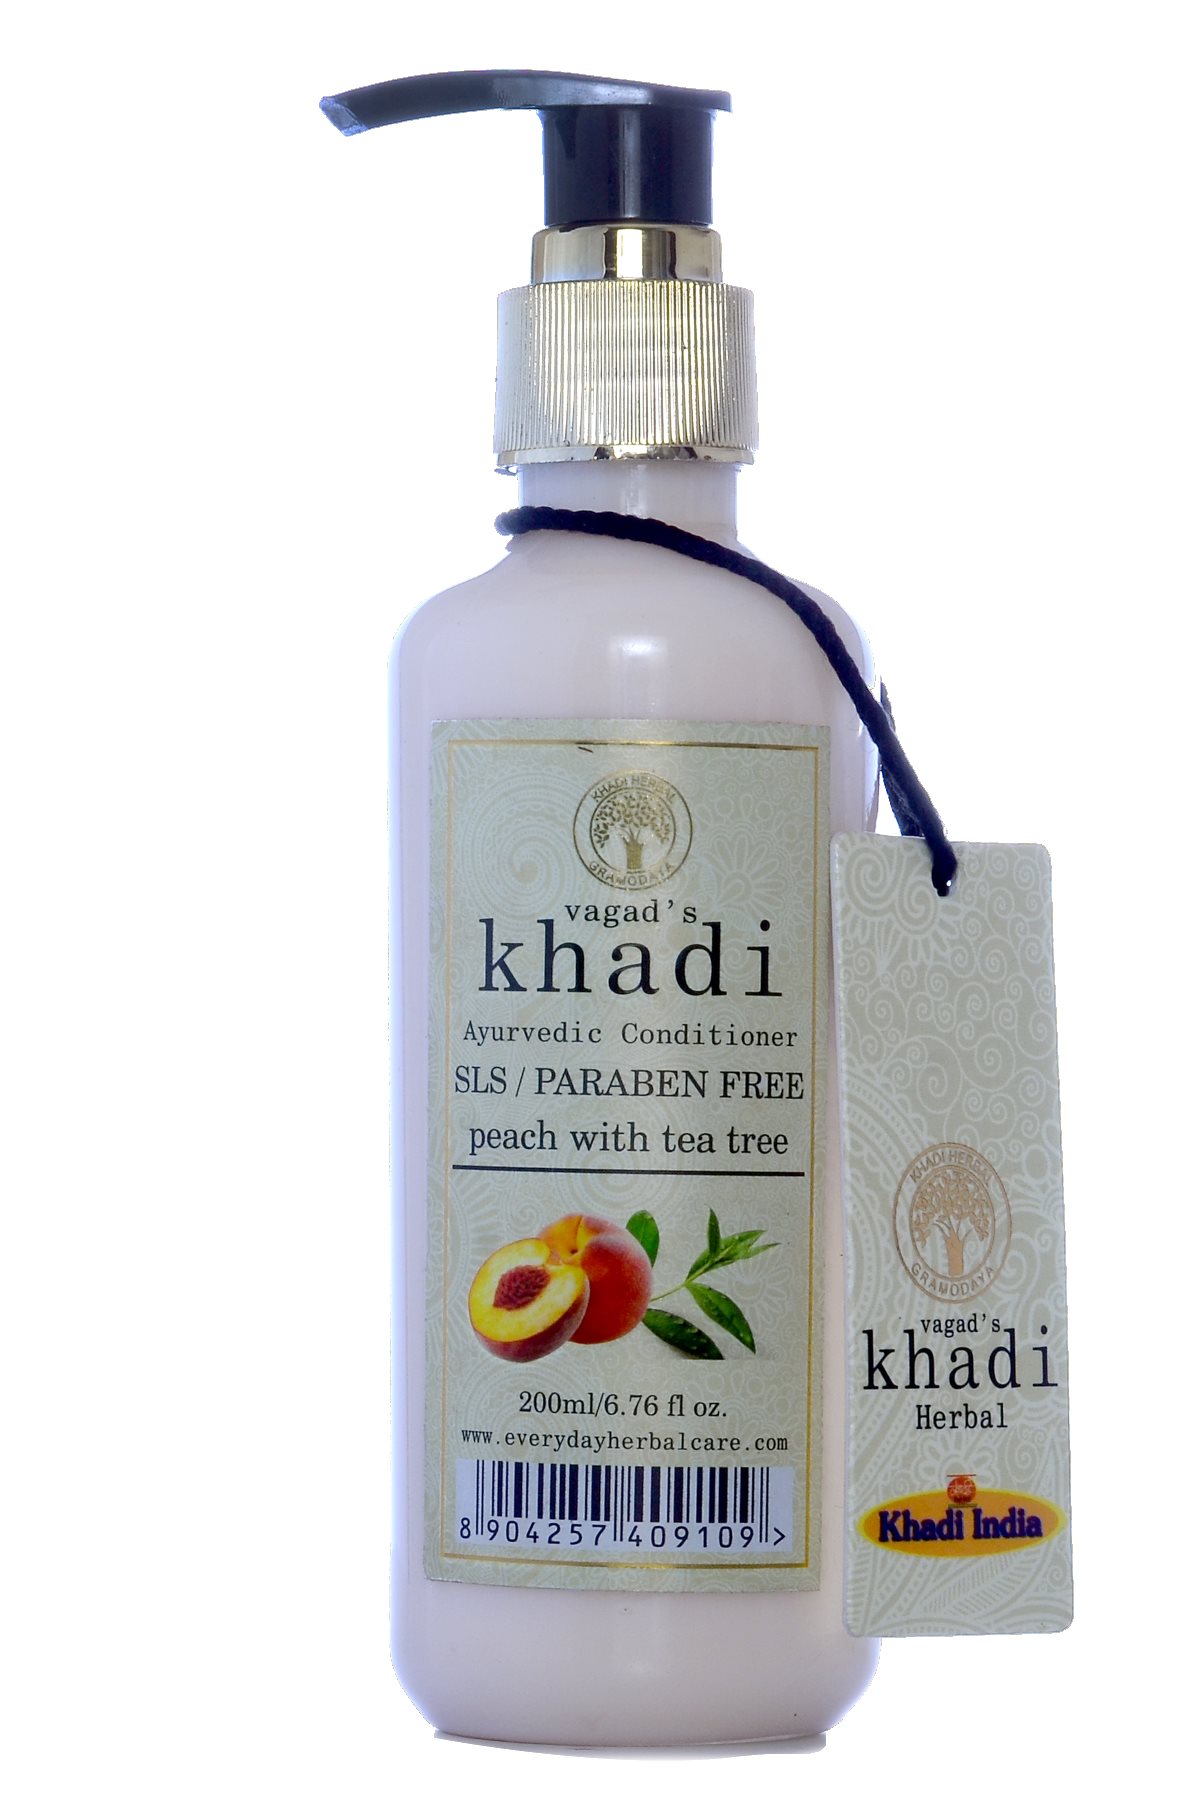 Buy Vagad's Khadi Peach With Tea Tree SLS And Paraben Free Conditioner at Best Price Online